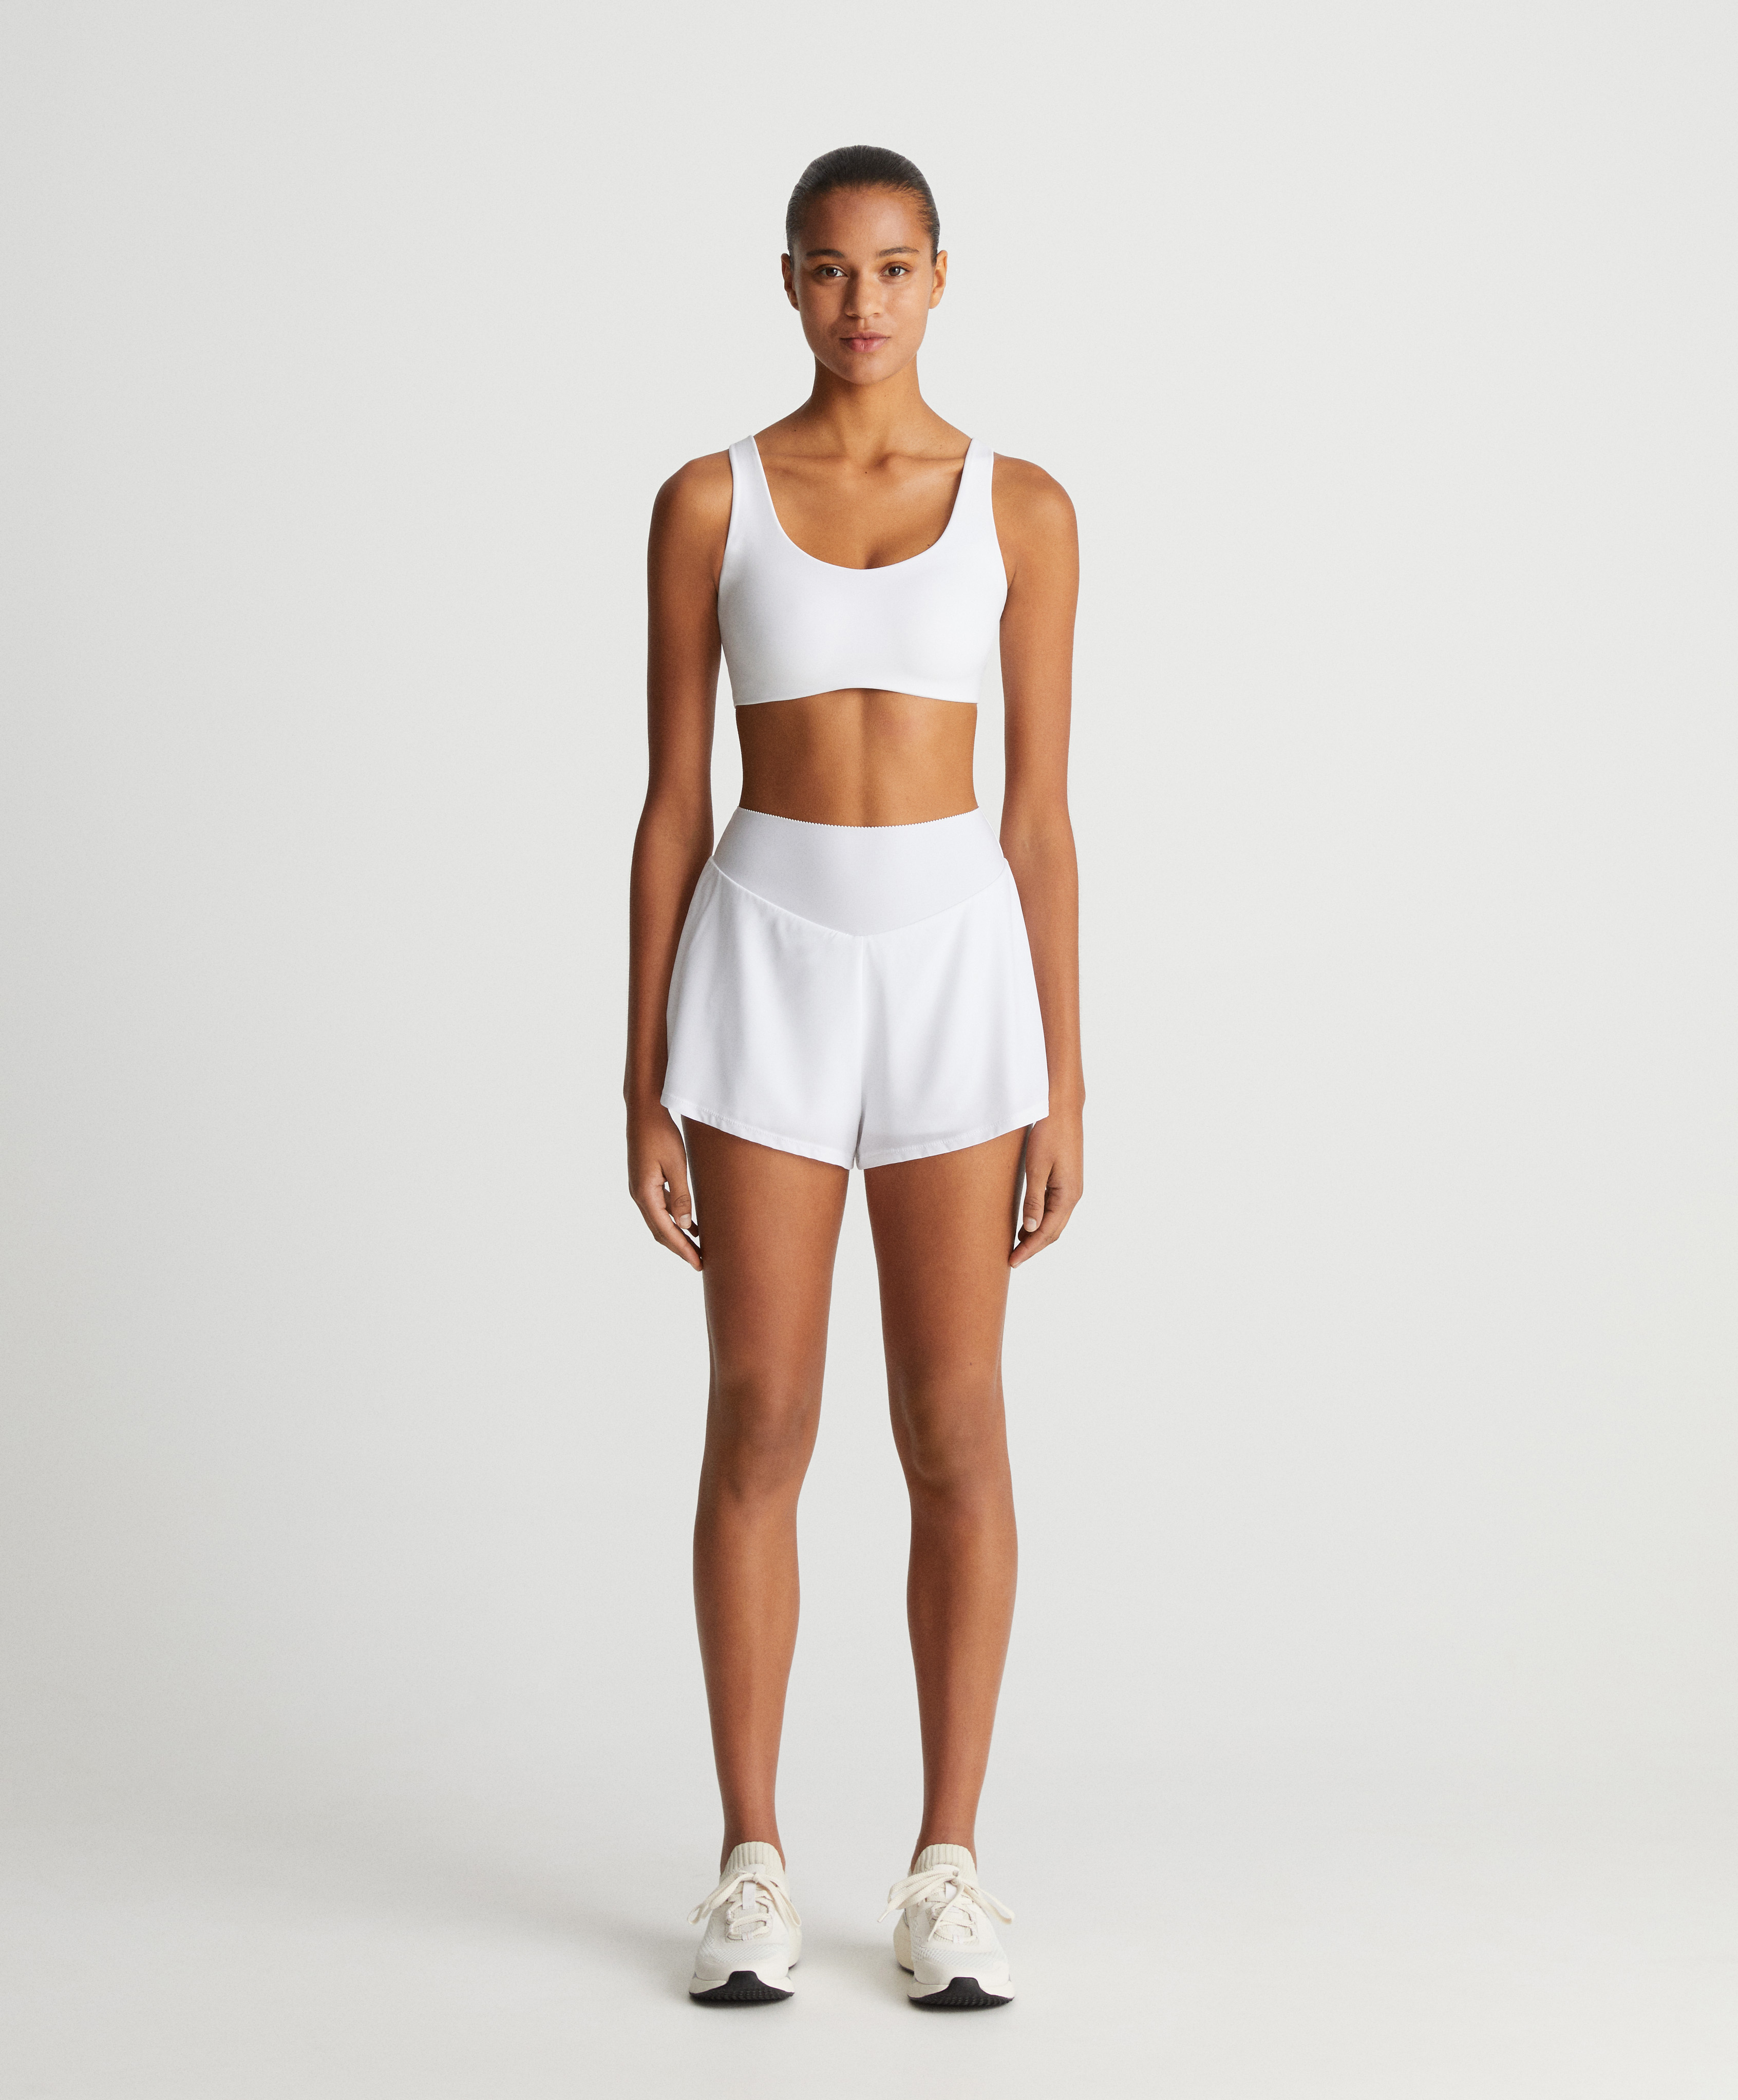 Compressive Total Look in Weiß mit Shorts